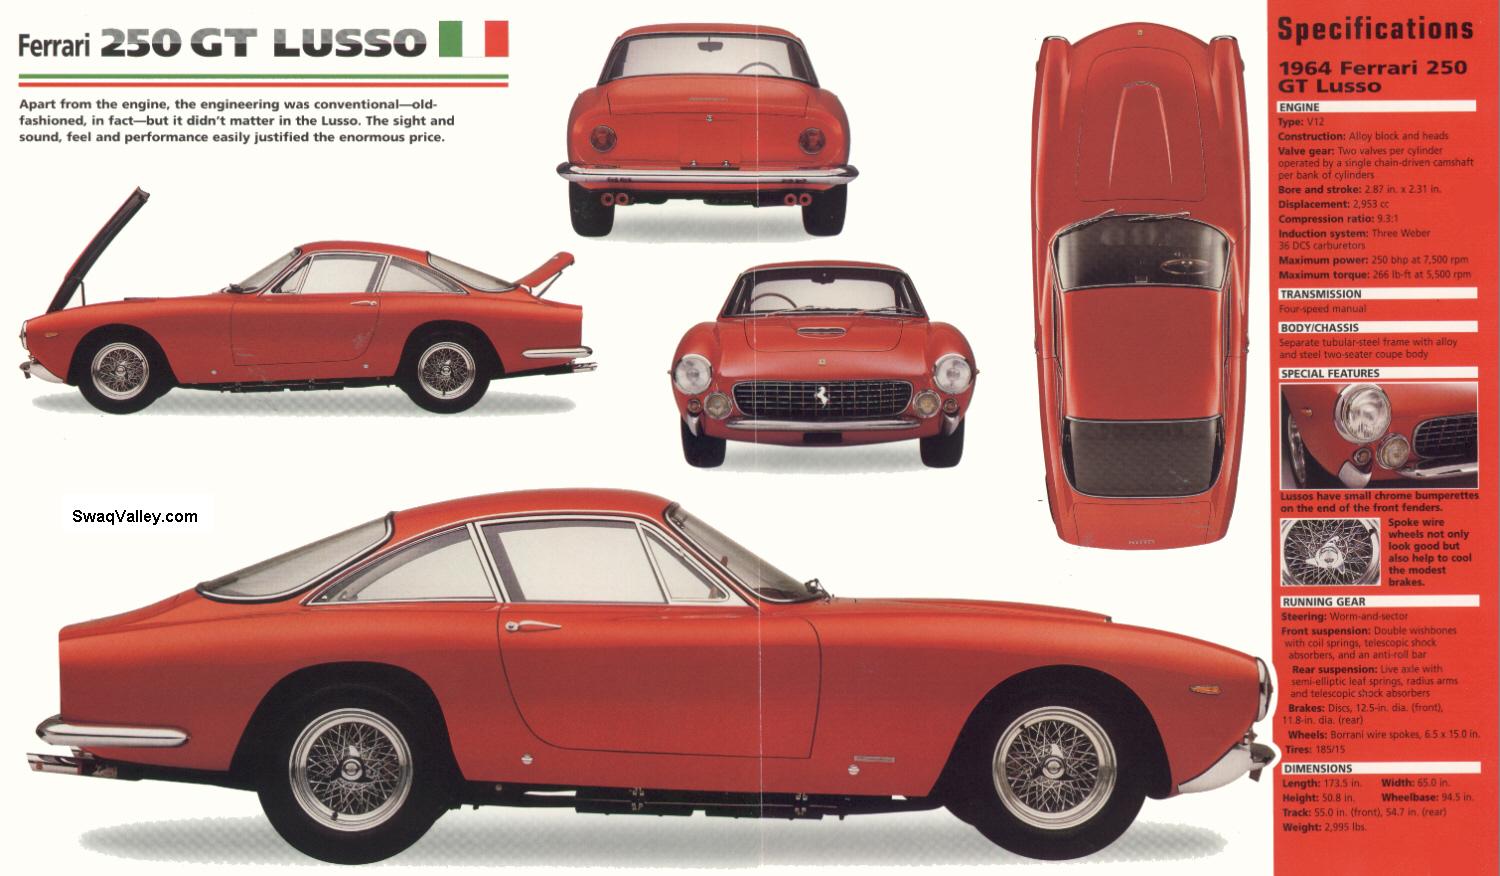 http://www.swaqvalley.com/Blueprints/1964_Ferrari_250_GT_Lusso.jpg